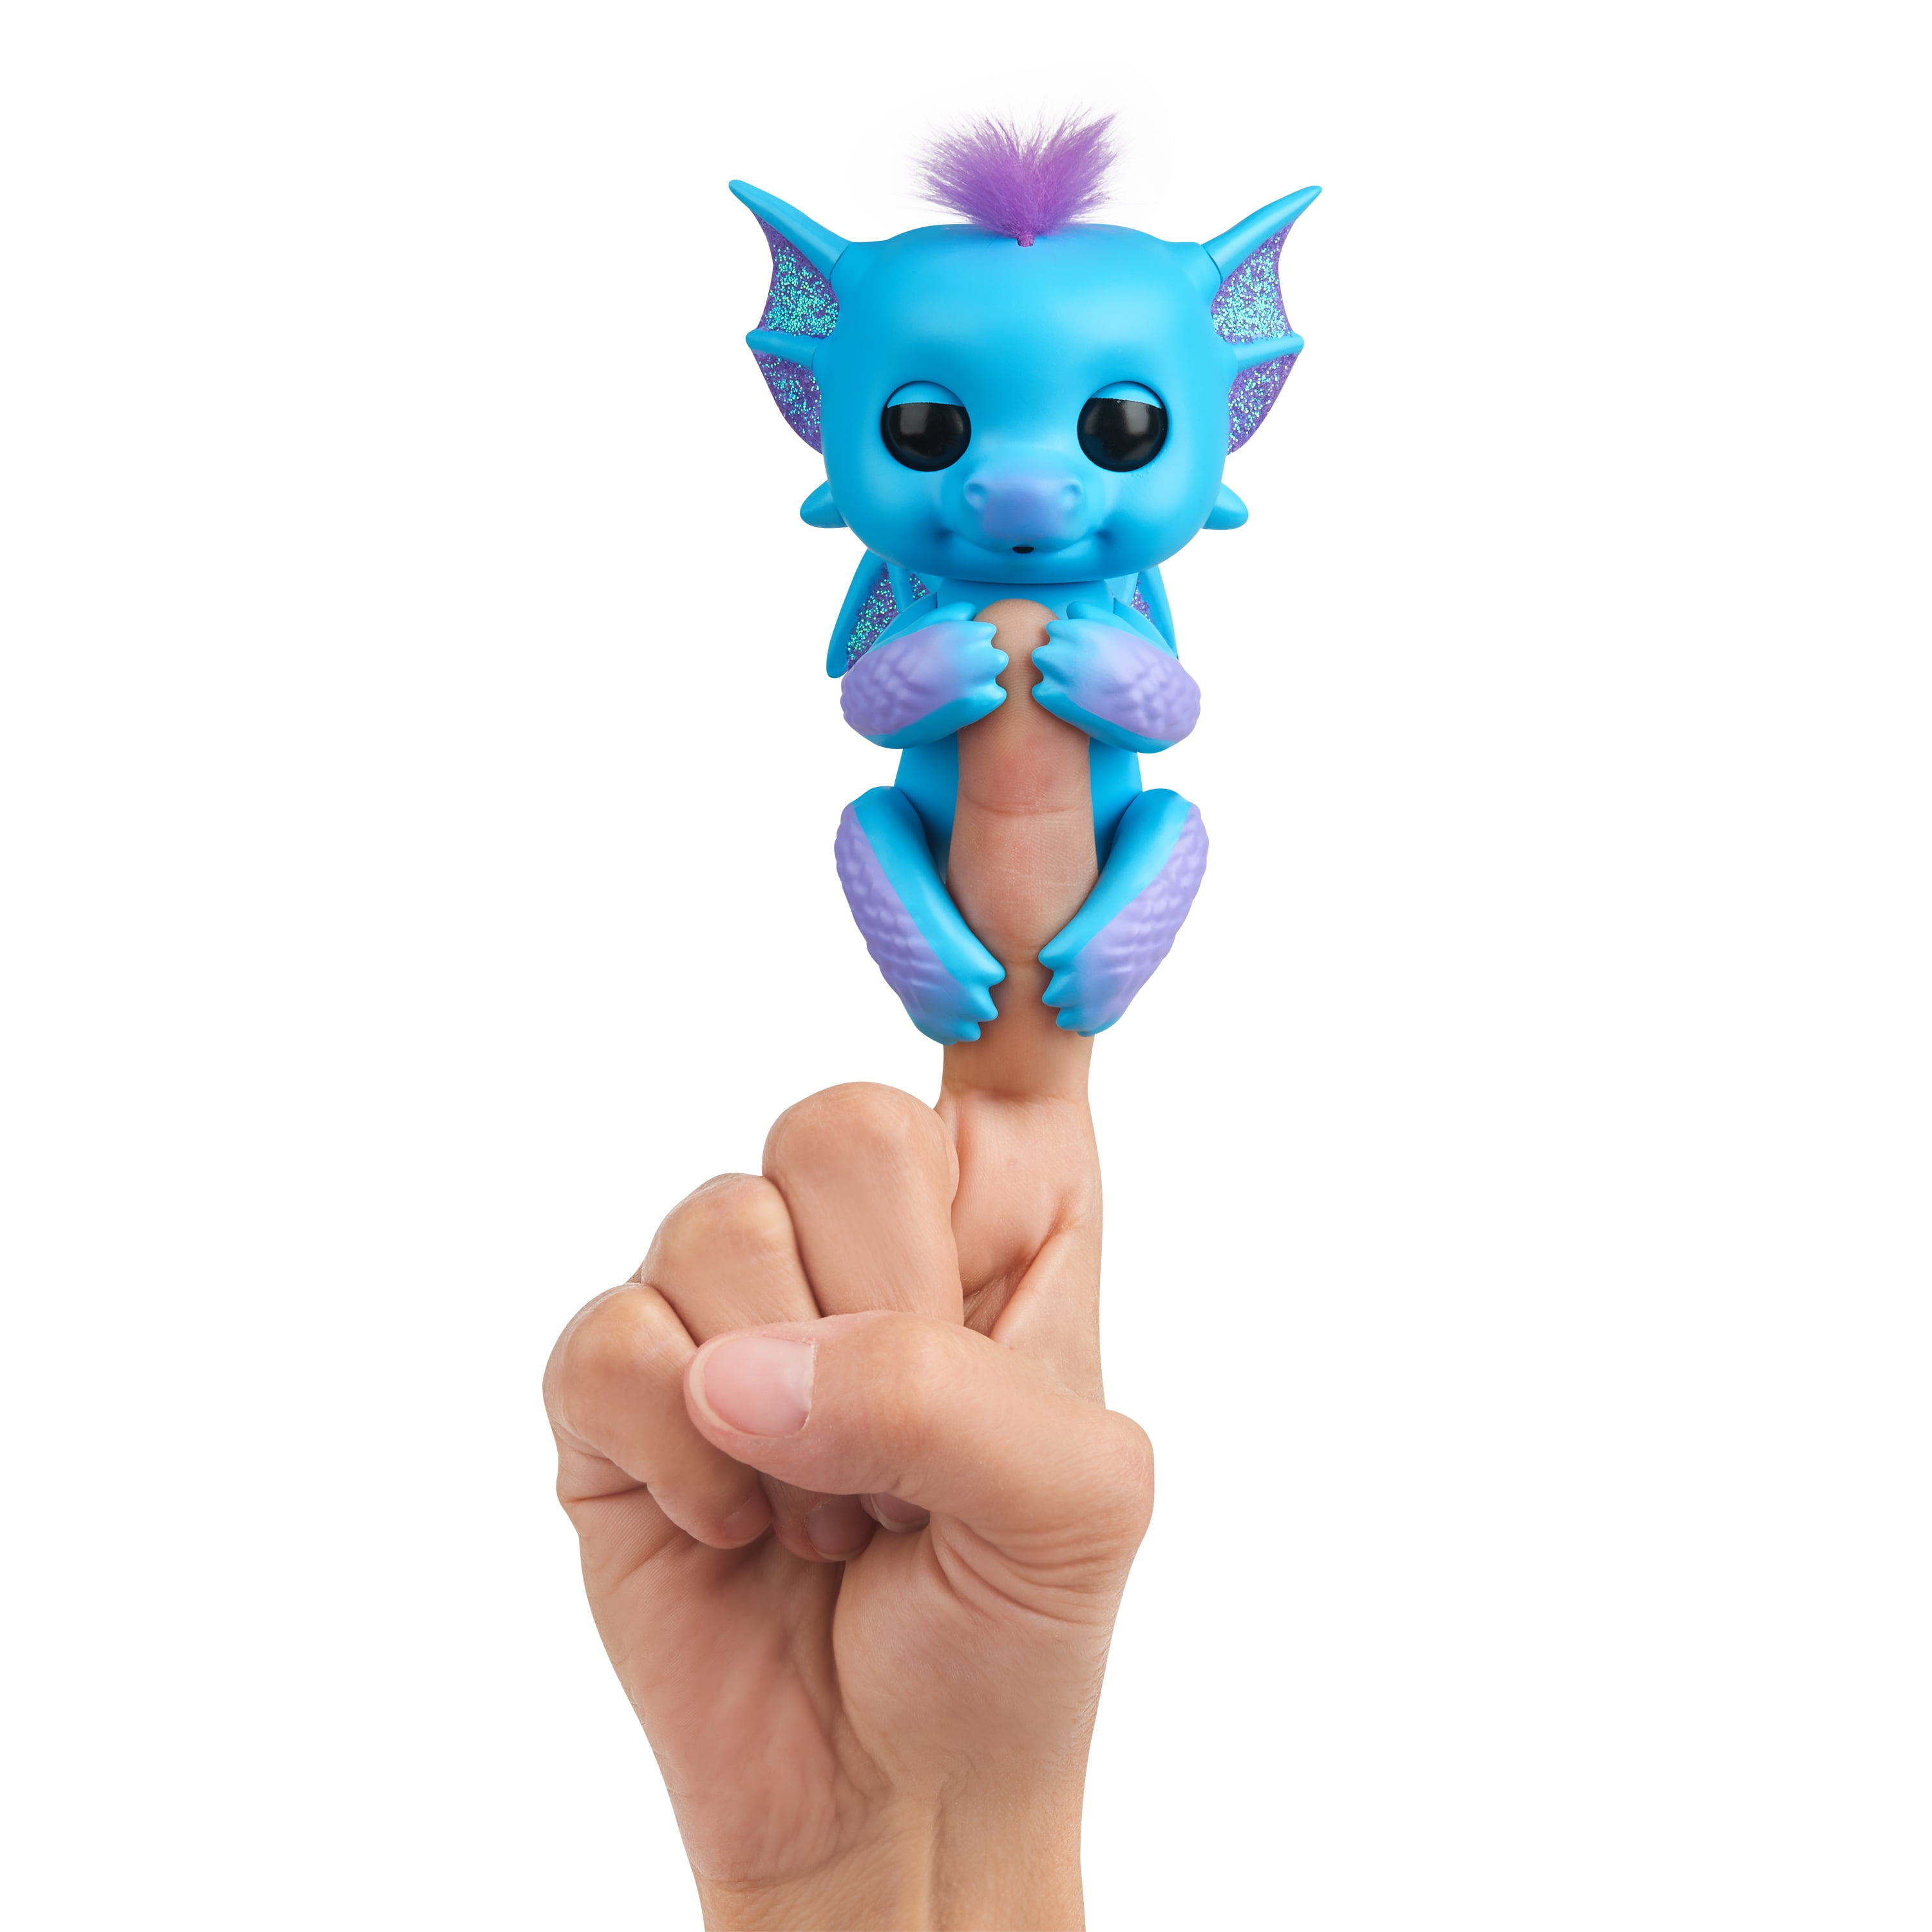 WowWee Fingerlings Tara Interactive Baby Dragon Blue/purple #3581 A11 for sale online 